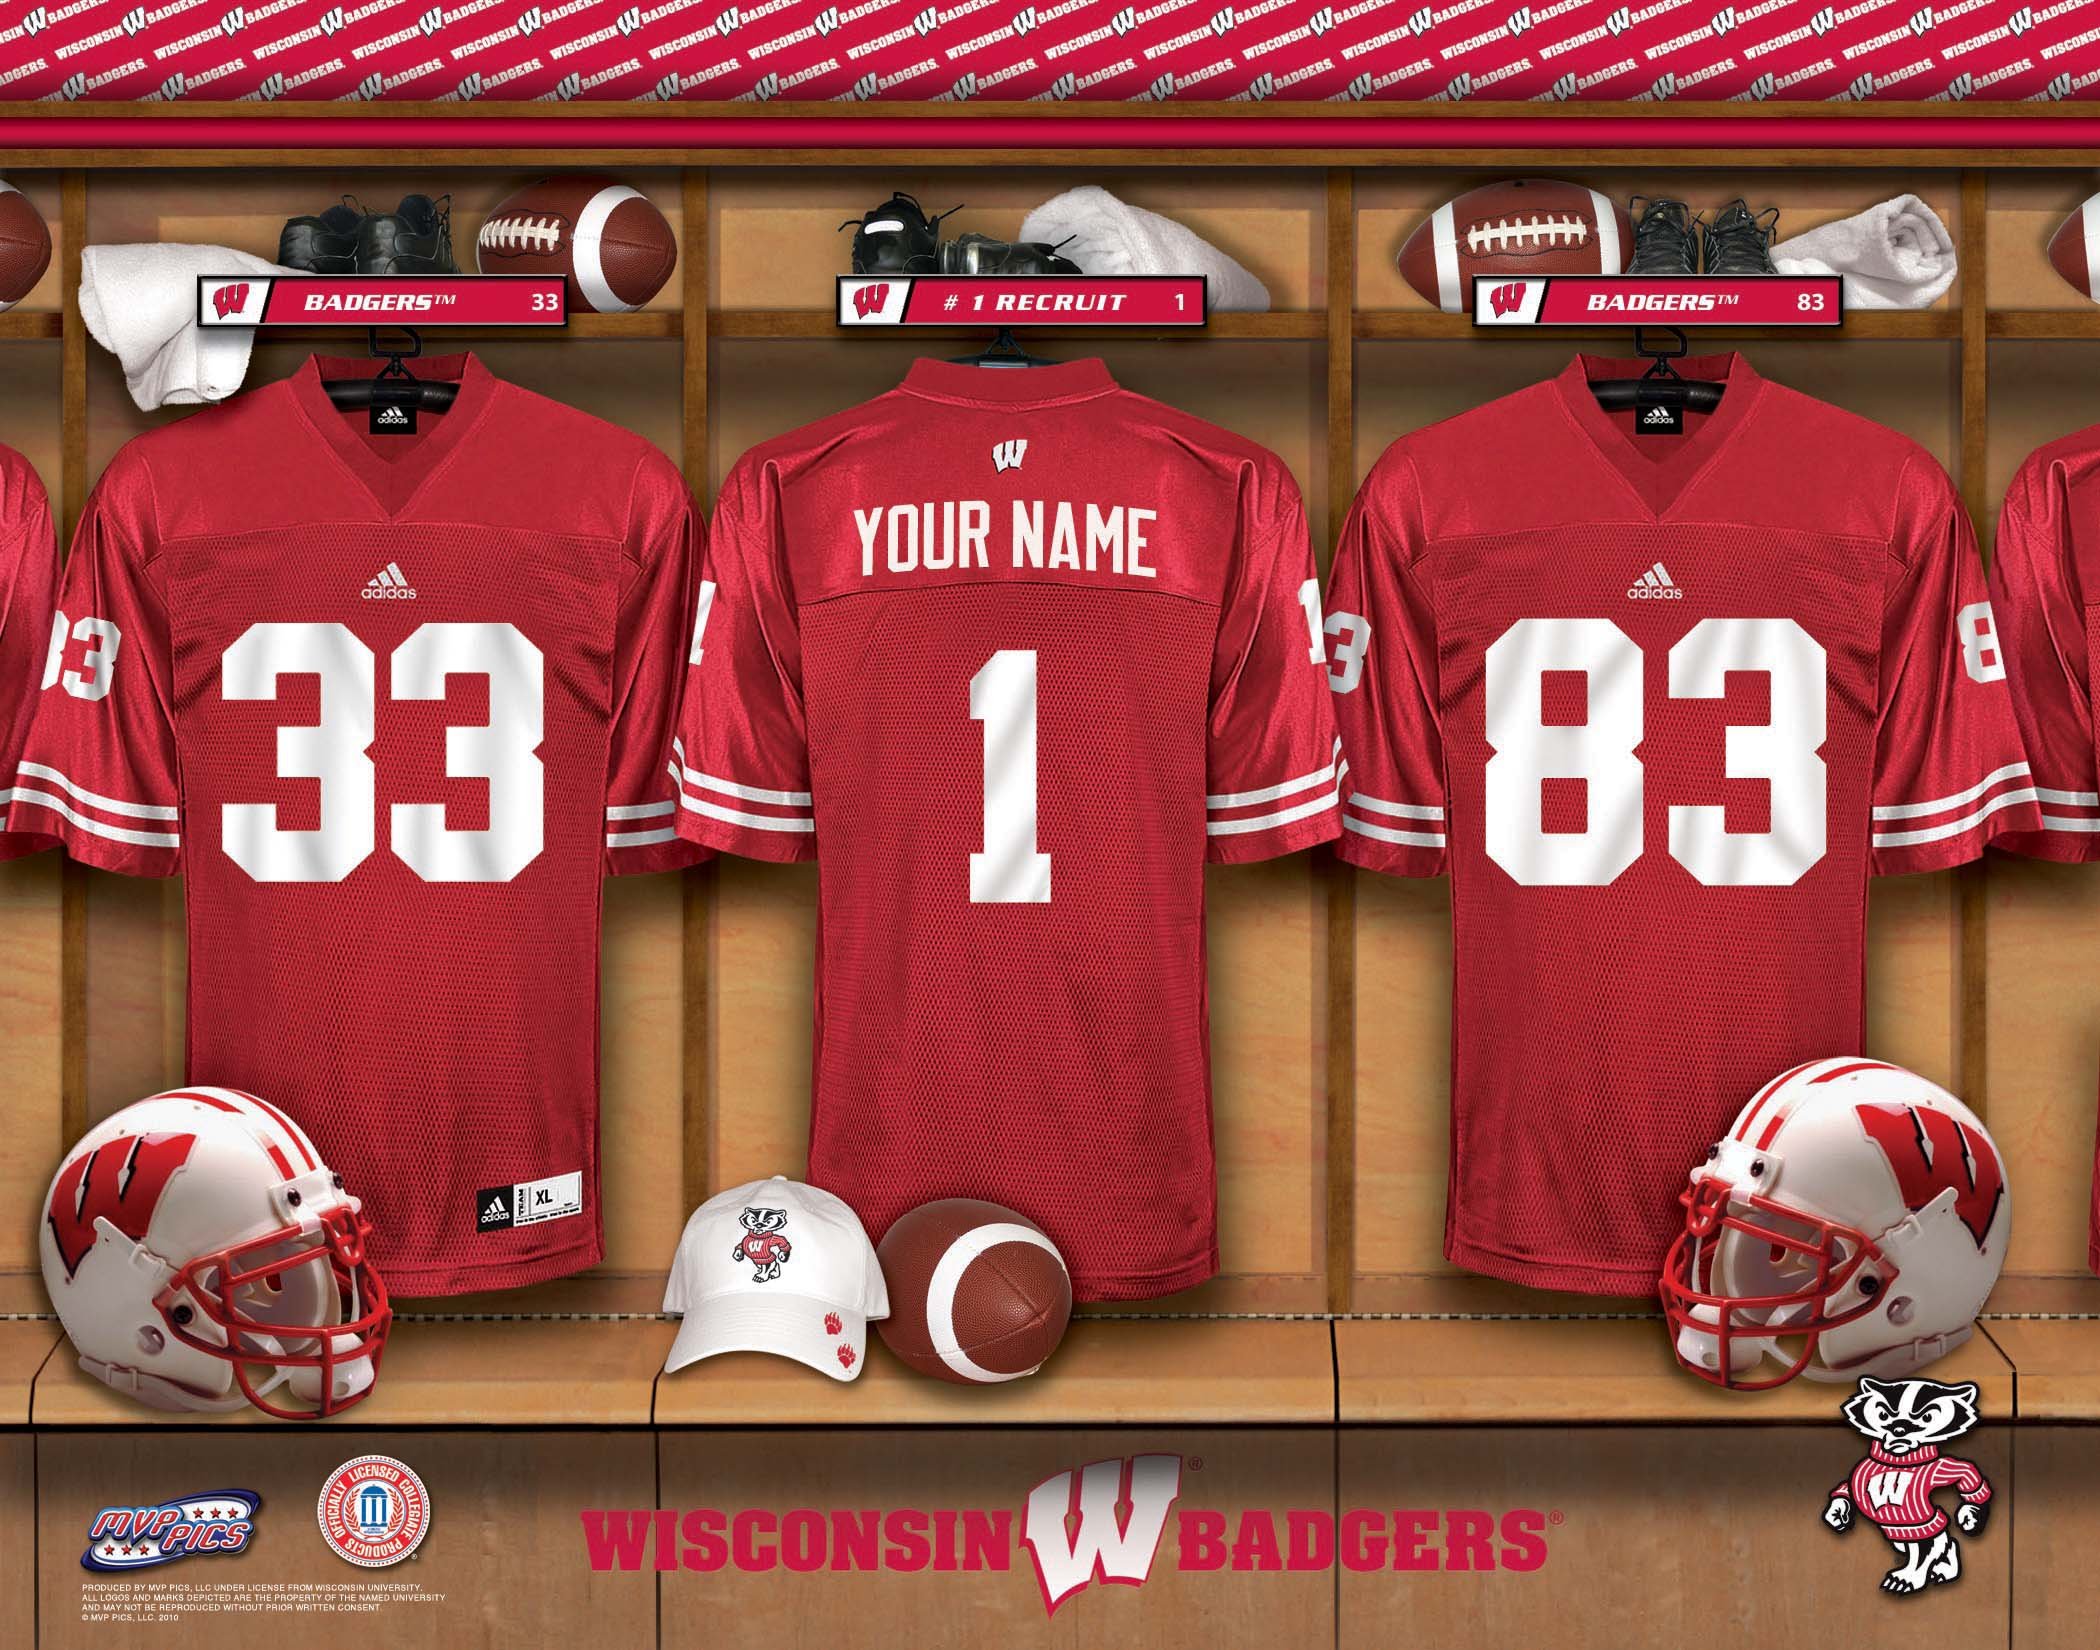 Wisconsin Badgers College Football Wallpaper Background